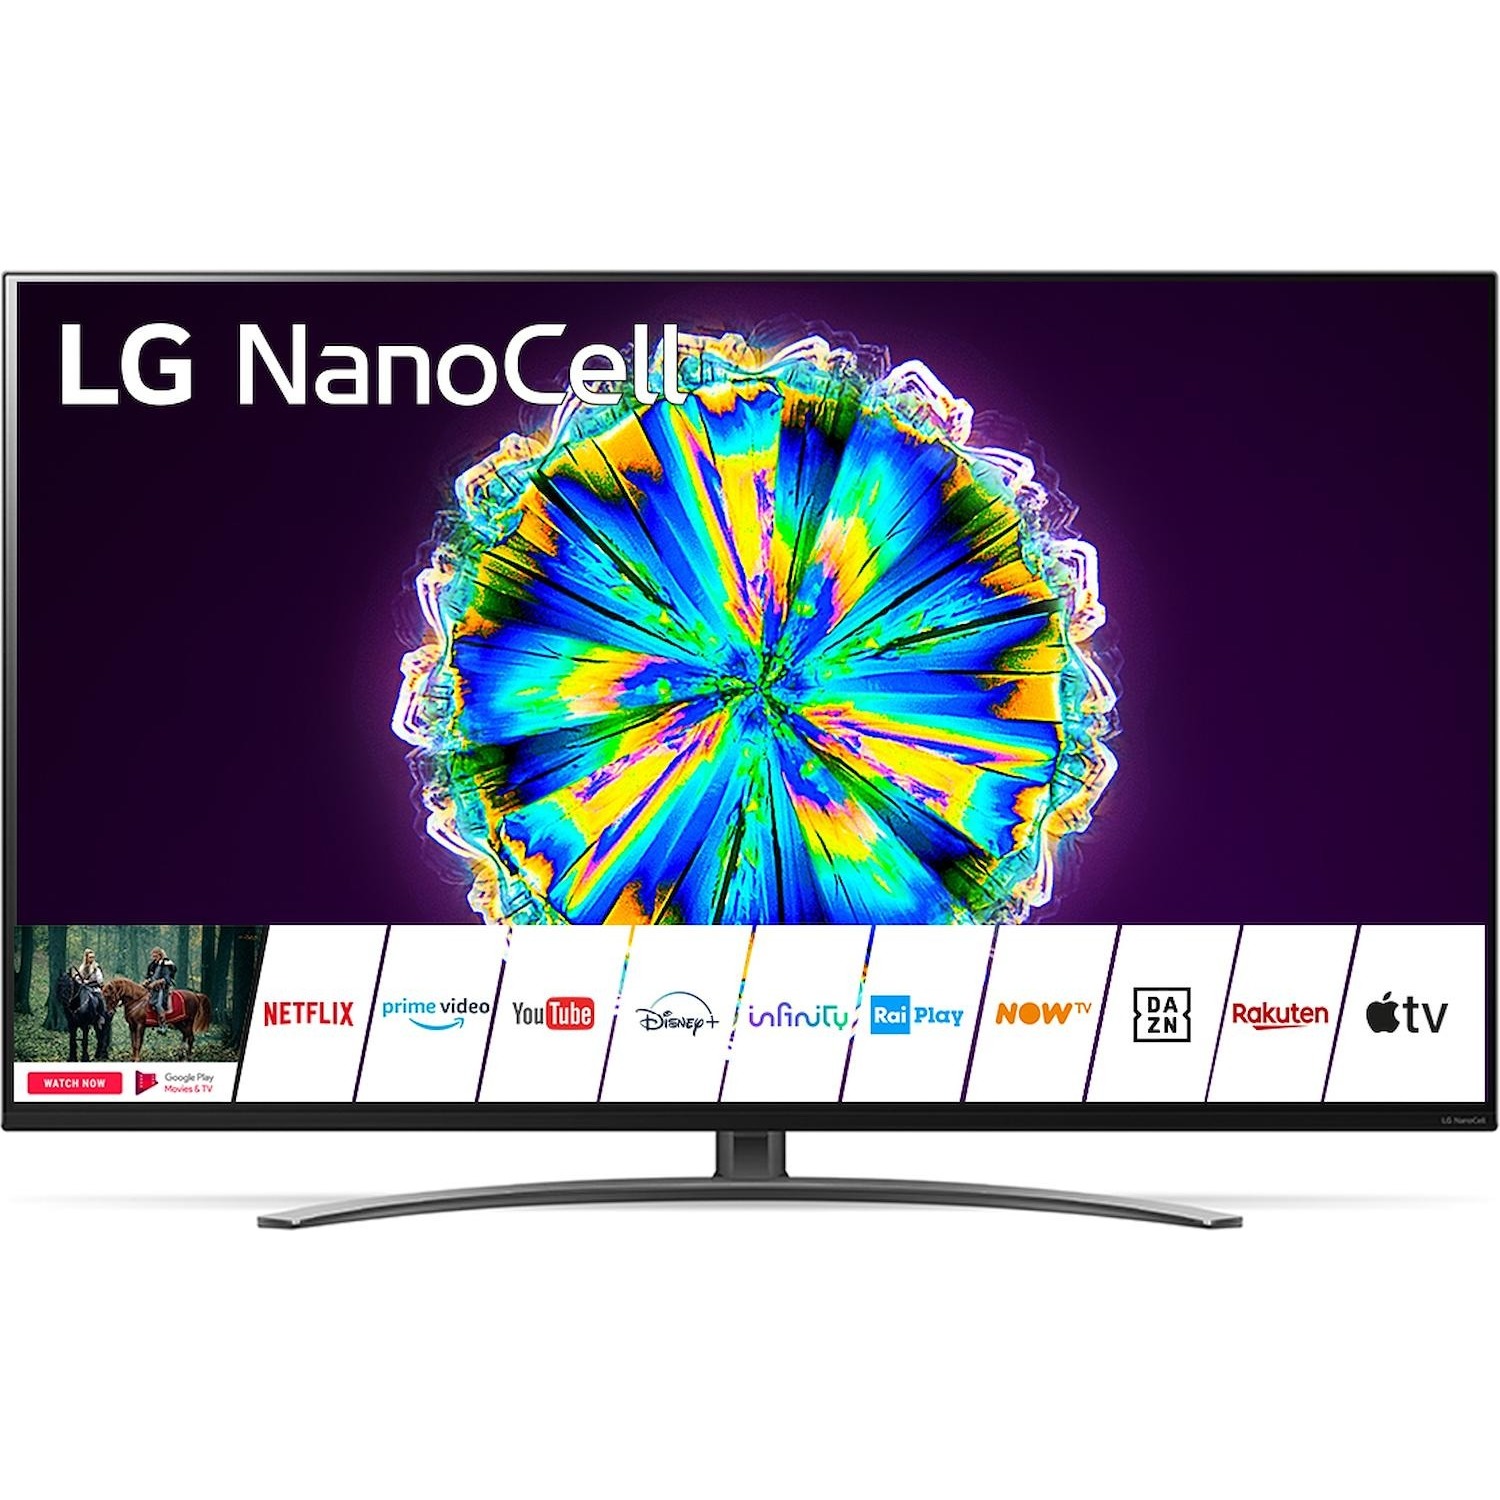 Immagine per TV LED LG 55NANO866 Calibrato 4K e FULL HD da DIMOStore